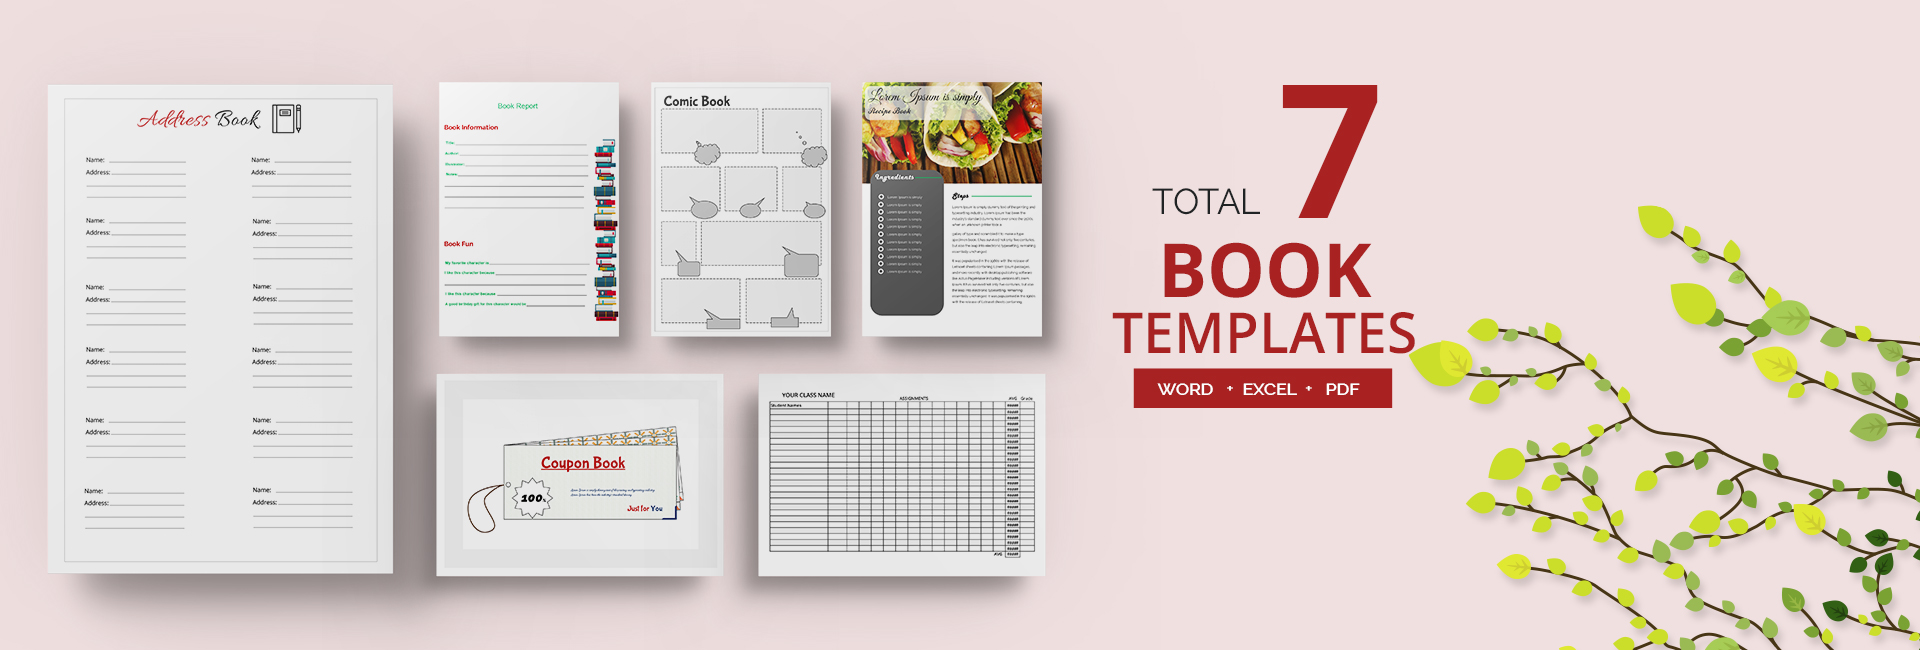 book_templates